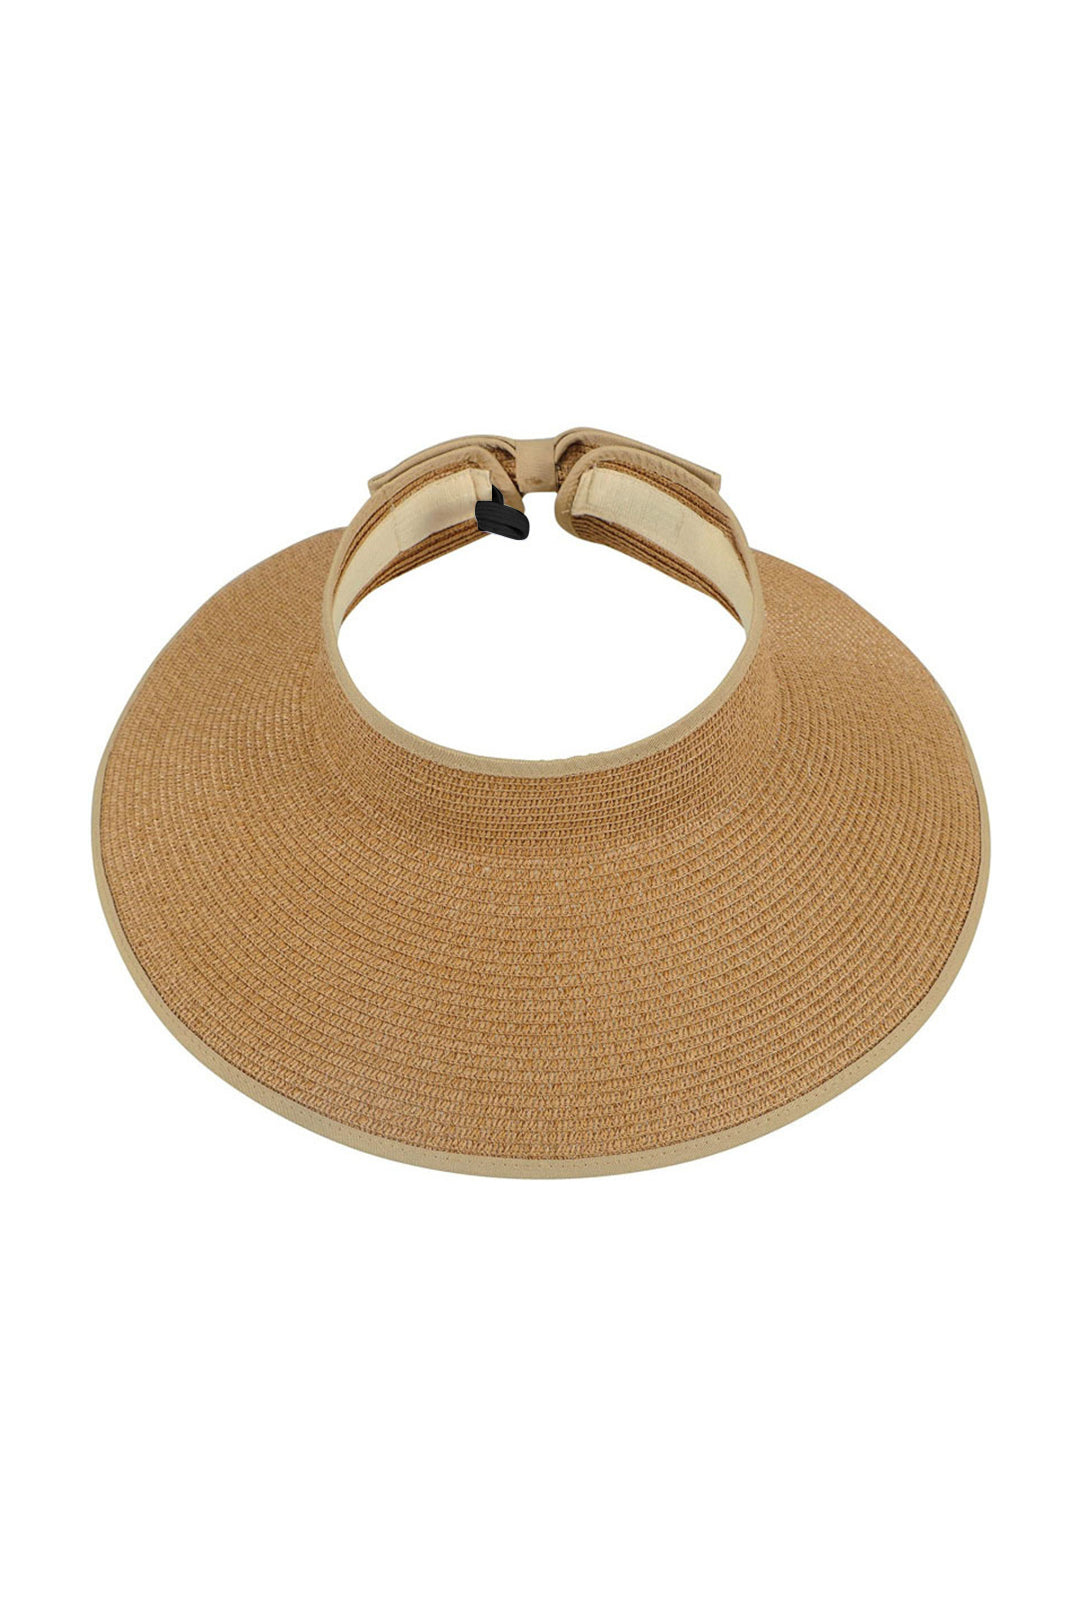 Foldable Straw Wide Brim Roll Up Beach Visor Hat